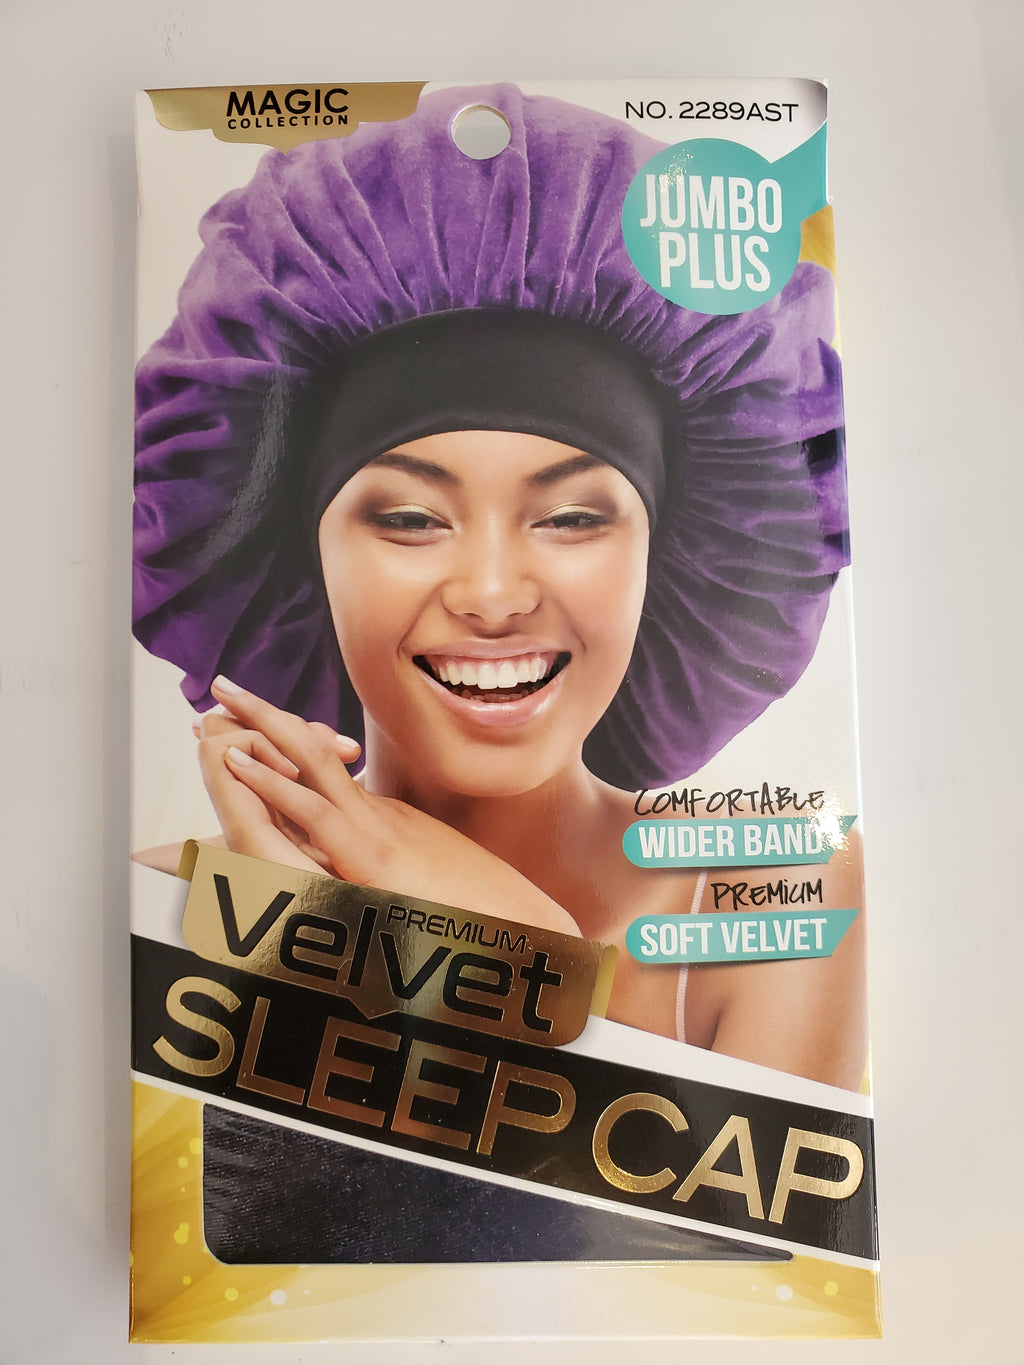 Magic Collection- Premium Velvet Sleep Cap (Jumbo Plus)